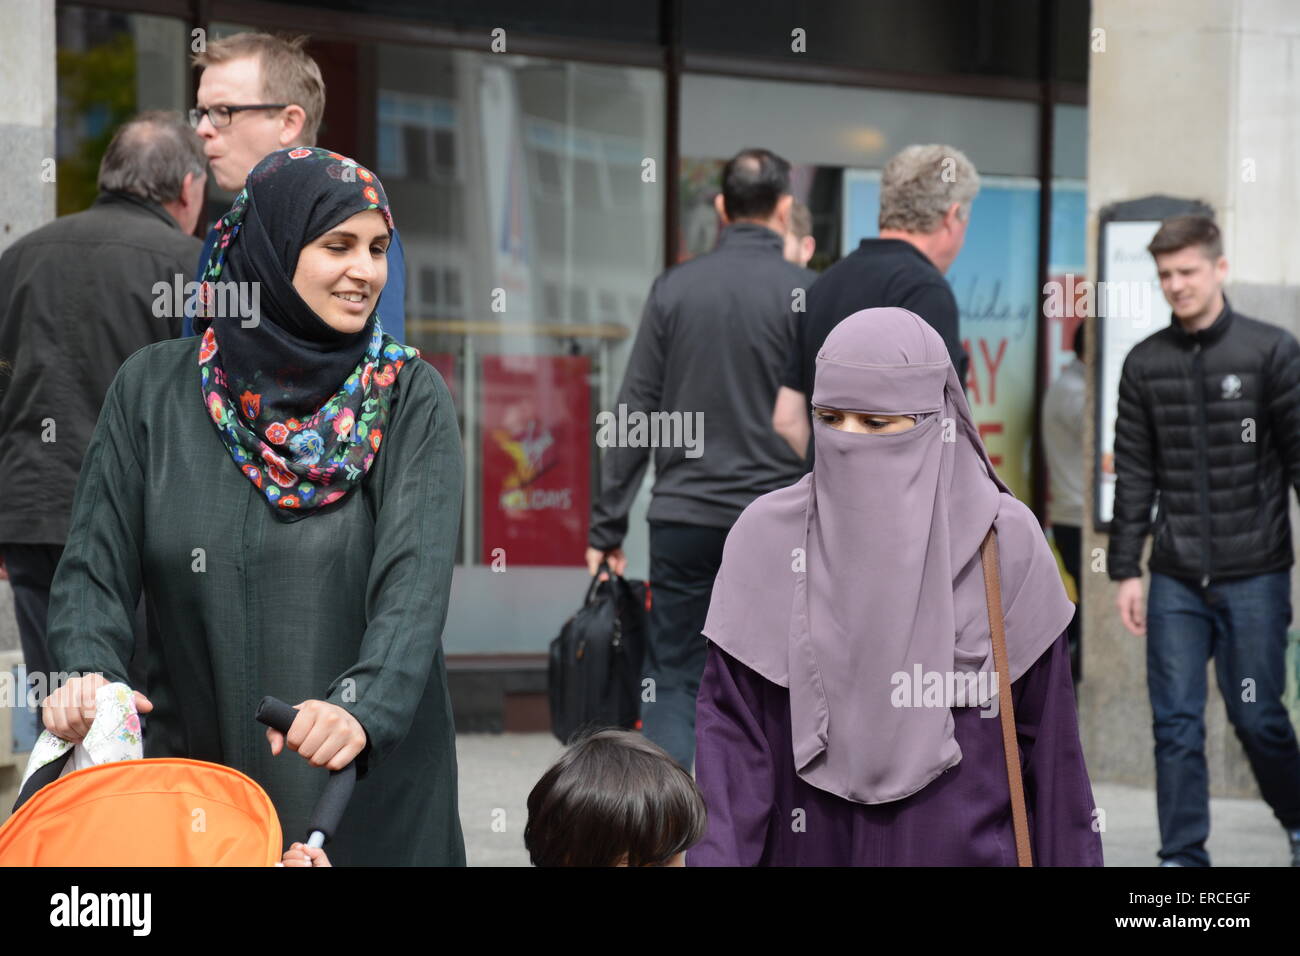 muslim-women-veiled-hijab-nottingham-england-ERCEGF.jpg